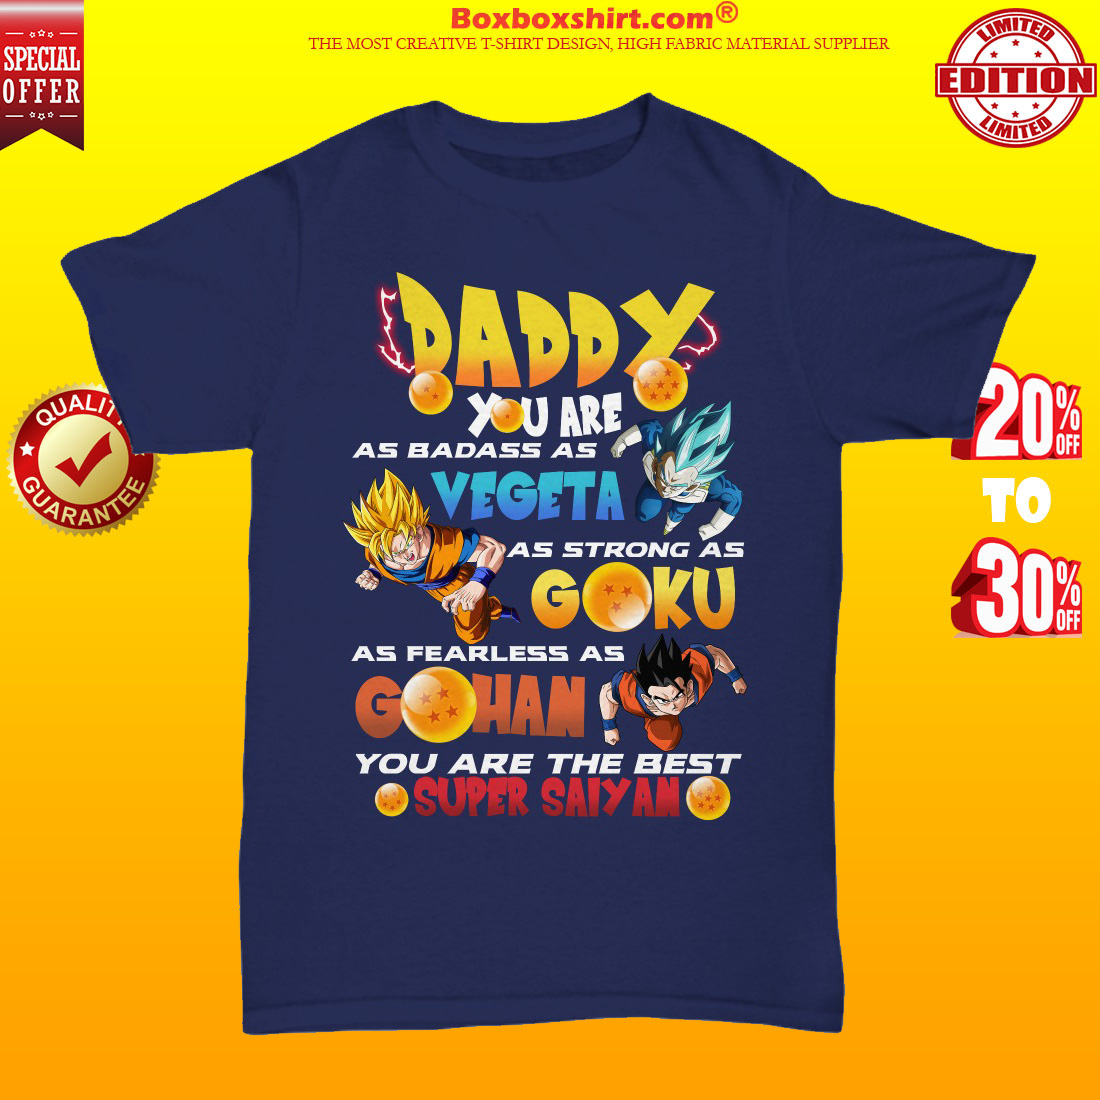 Daddy you are as badass as Vegeta as strong as Goku as fearless as Gohan unisex tee shirt